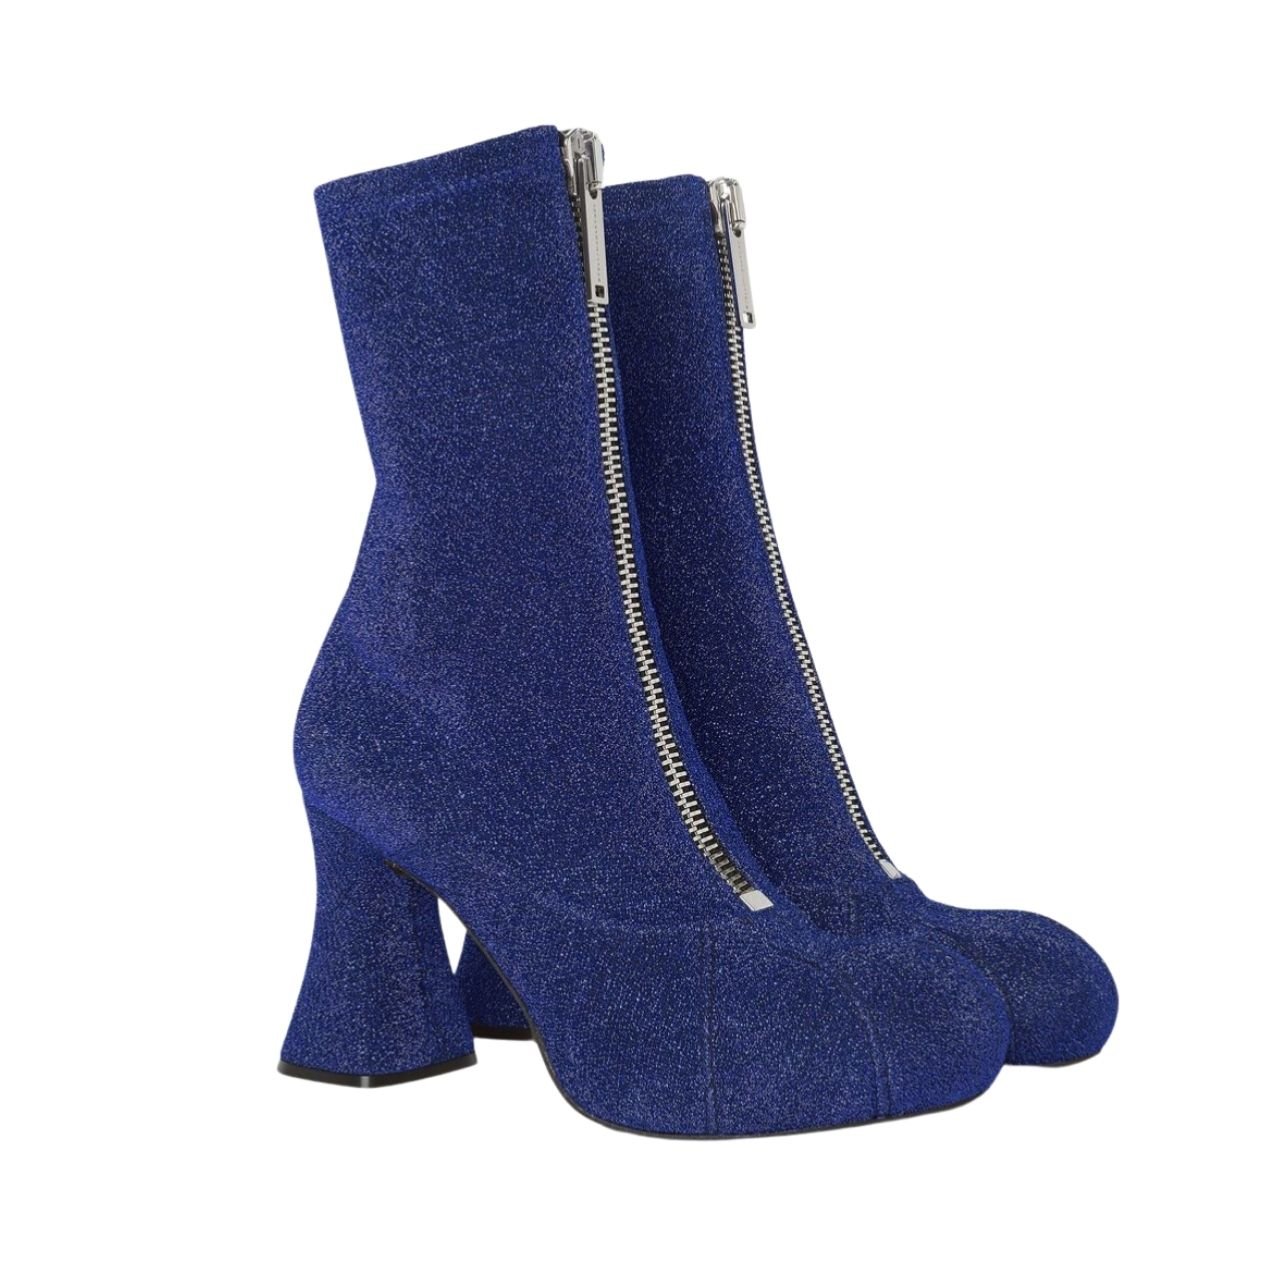 Stella McCartney blue glittery ankle boots